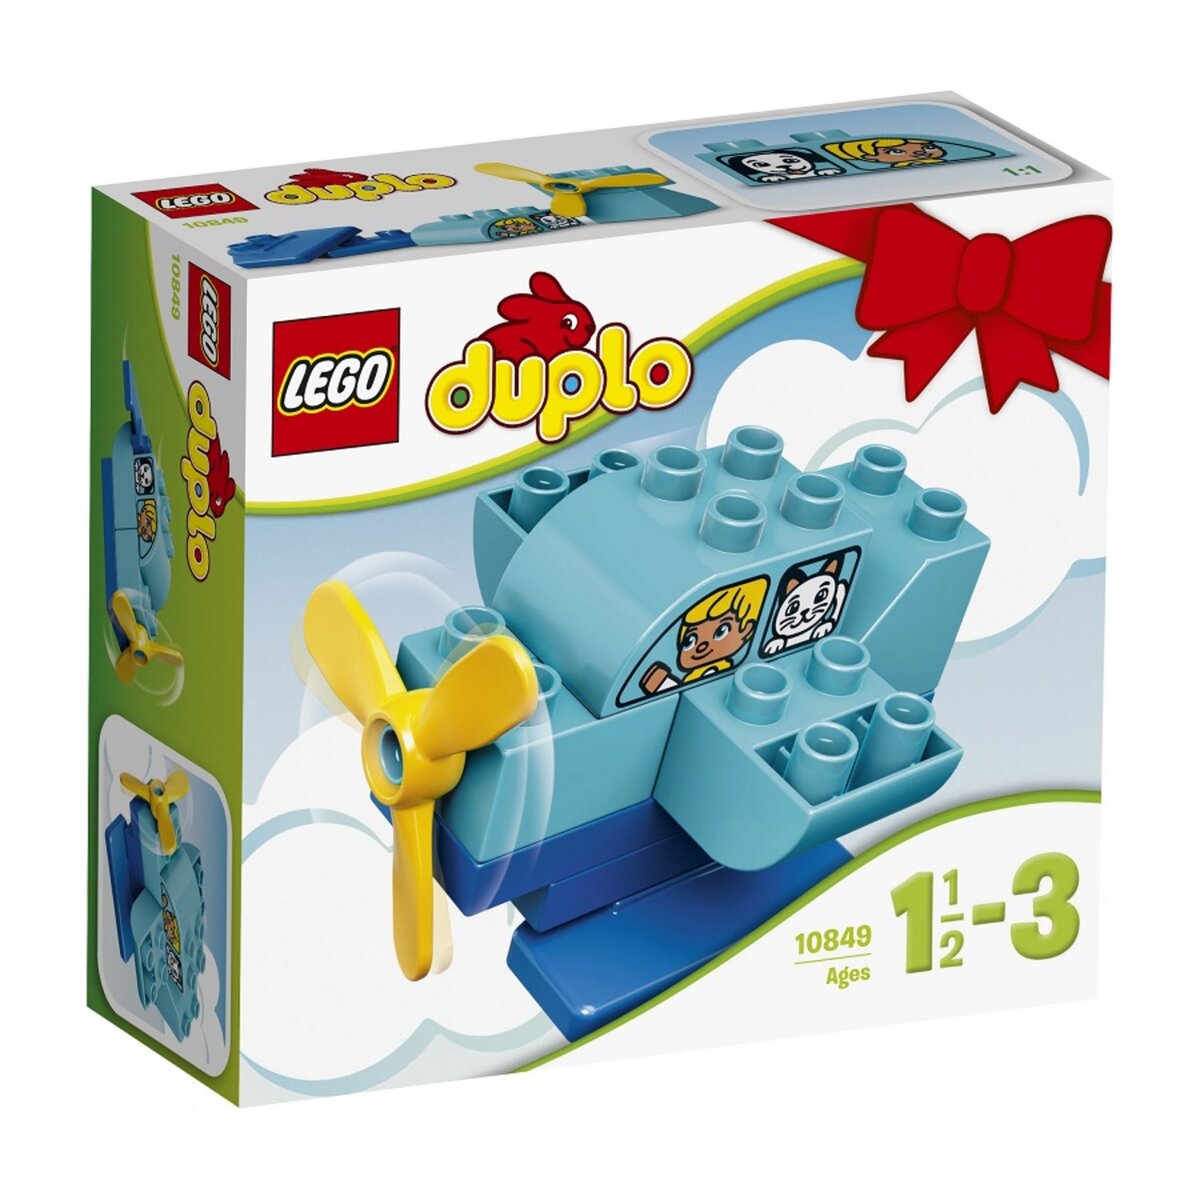 LEGO Duplo Creative Play 10849 - Mon premier avion